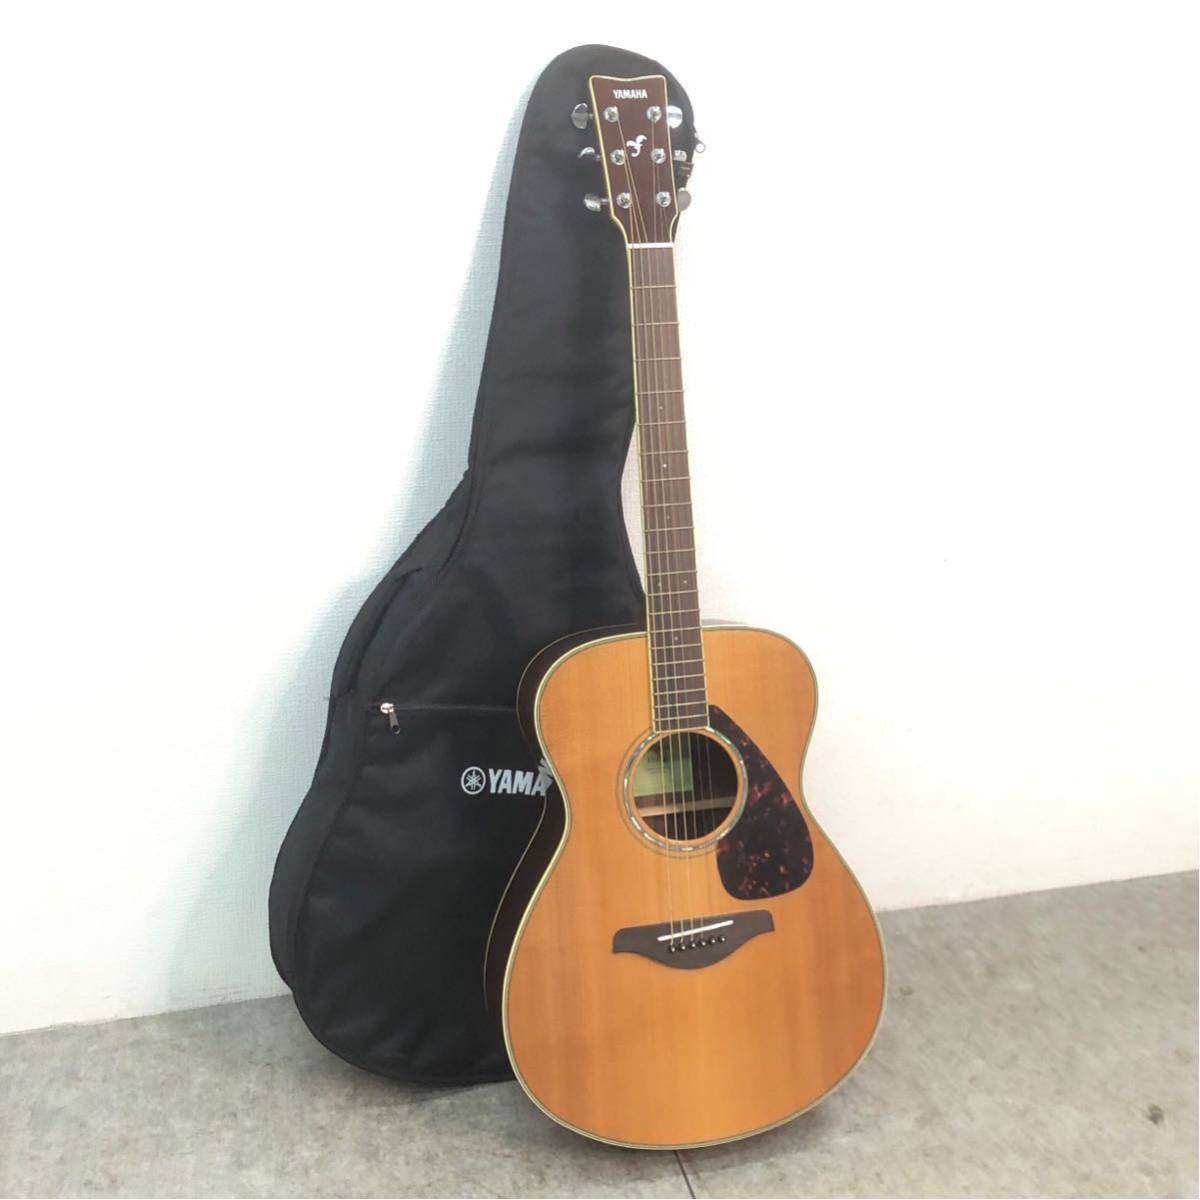 □YAMAHA ヤマハ アコースティックギター FS830 ソフトケース 取扱説明書 付き アコギ 楽器 弦楽器 ギター 6弦 HPM200145 □23122502_画像1